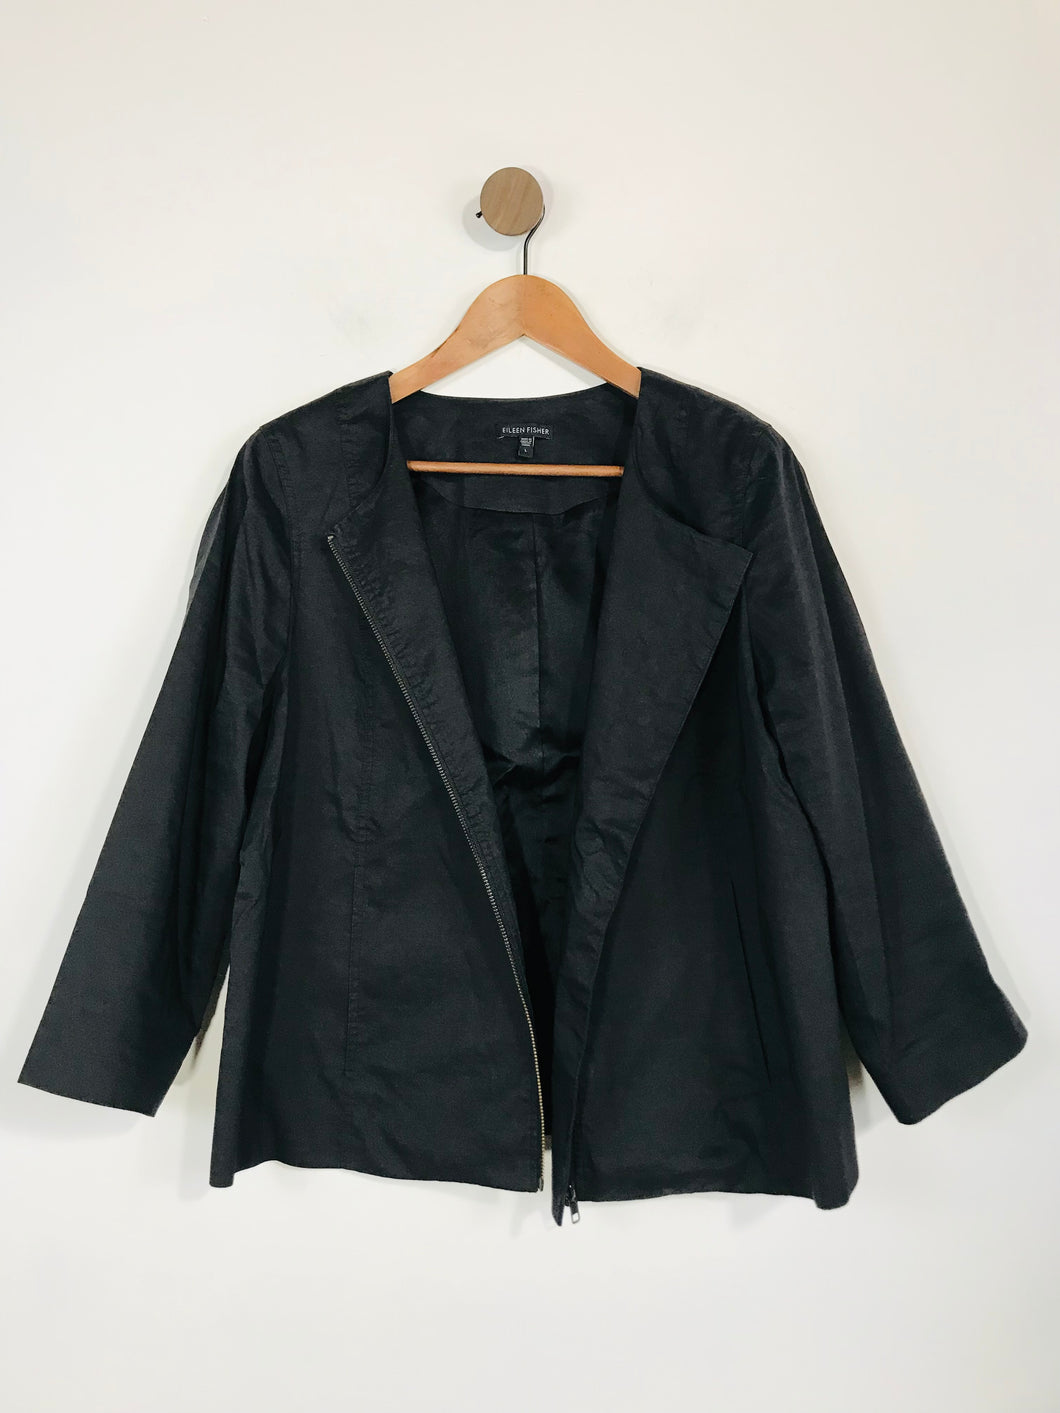 Eileen Fisher Women's Bomber Jacket | L UK14 | Black